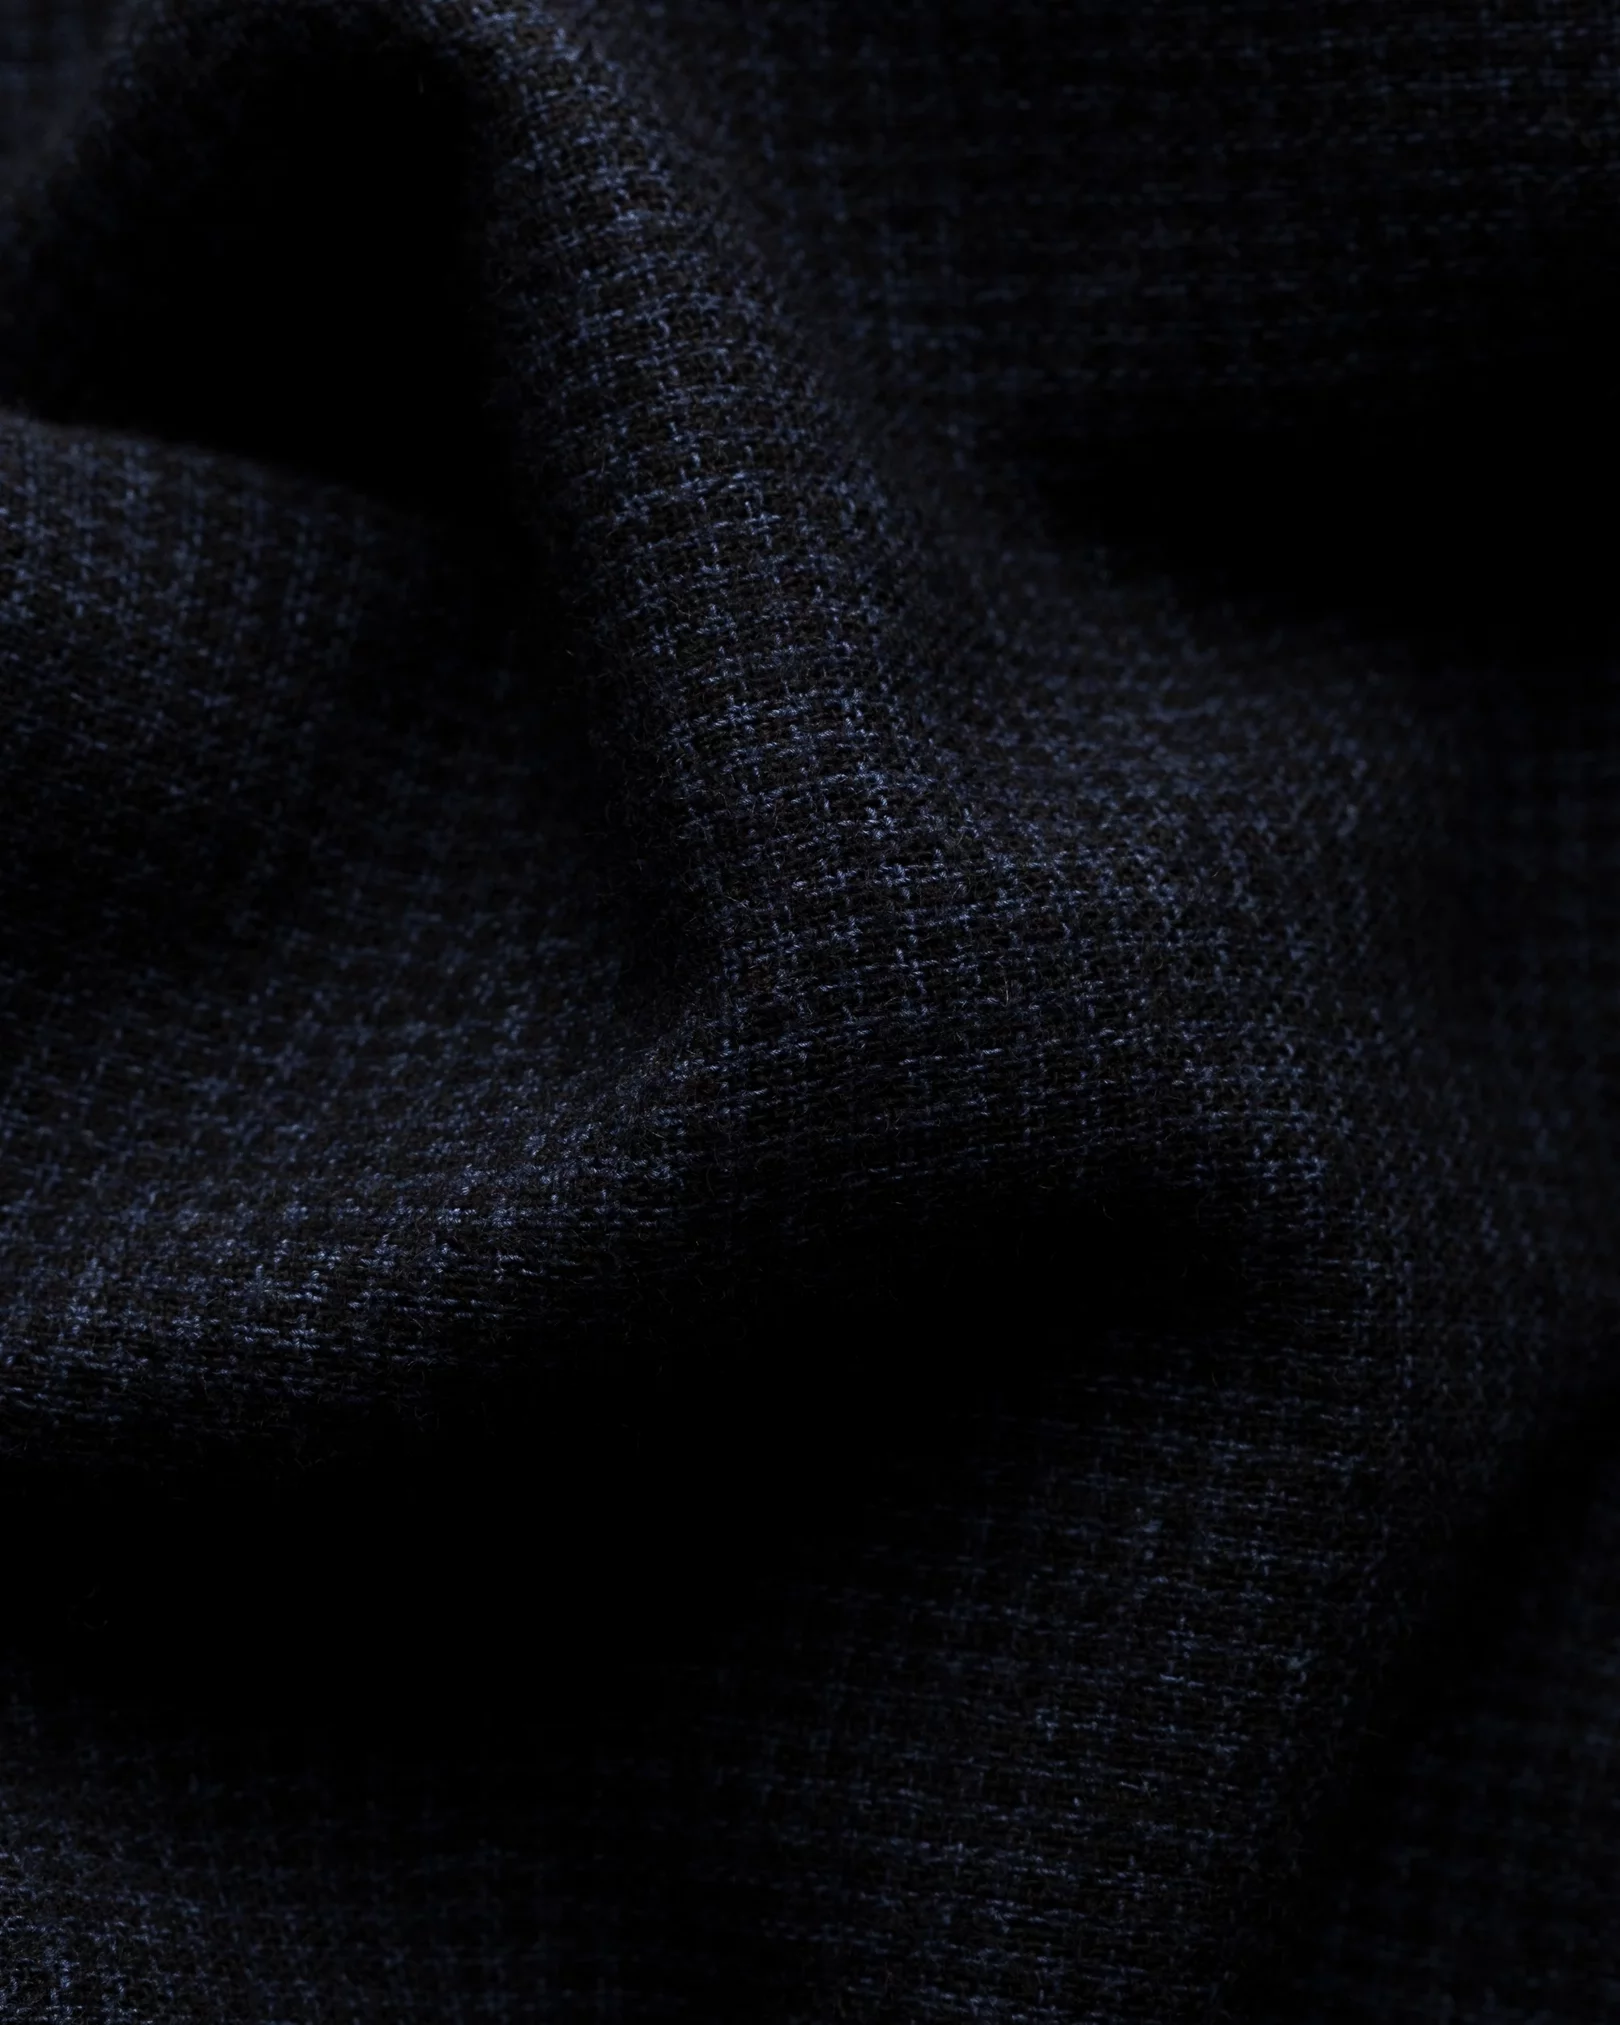 Eton - navy blue cotton wool cashmere collar with no collarstand single cuff pointed strap regular